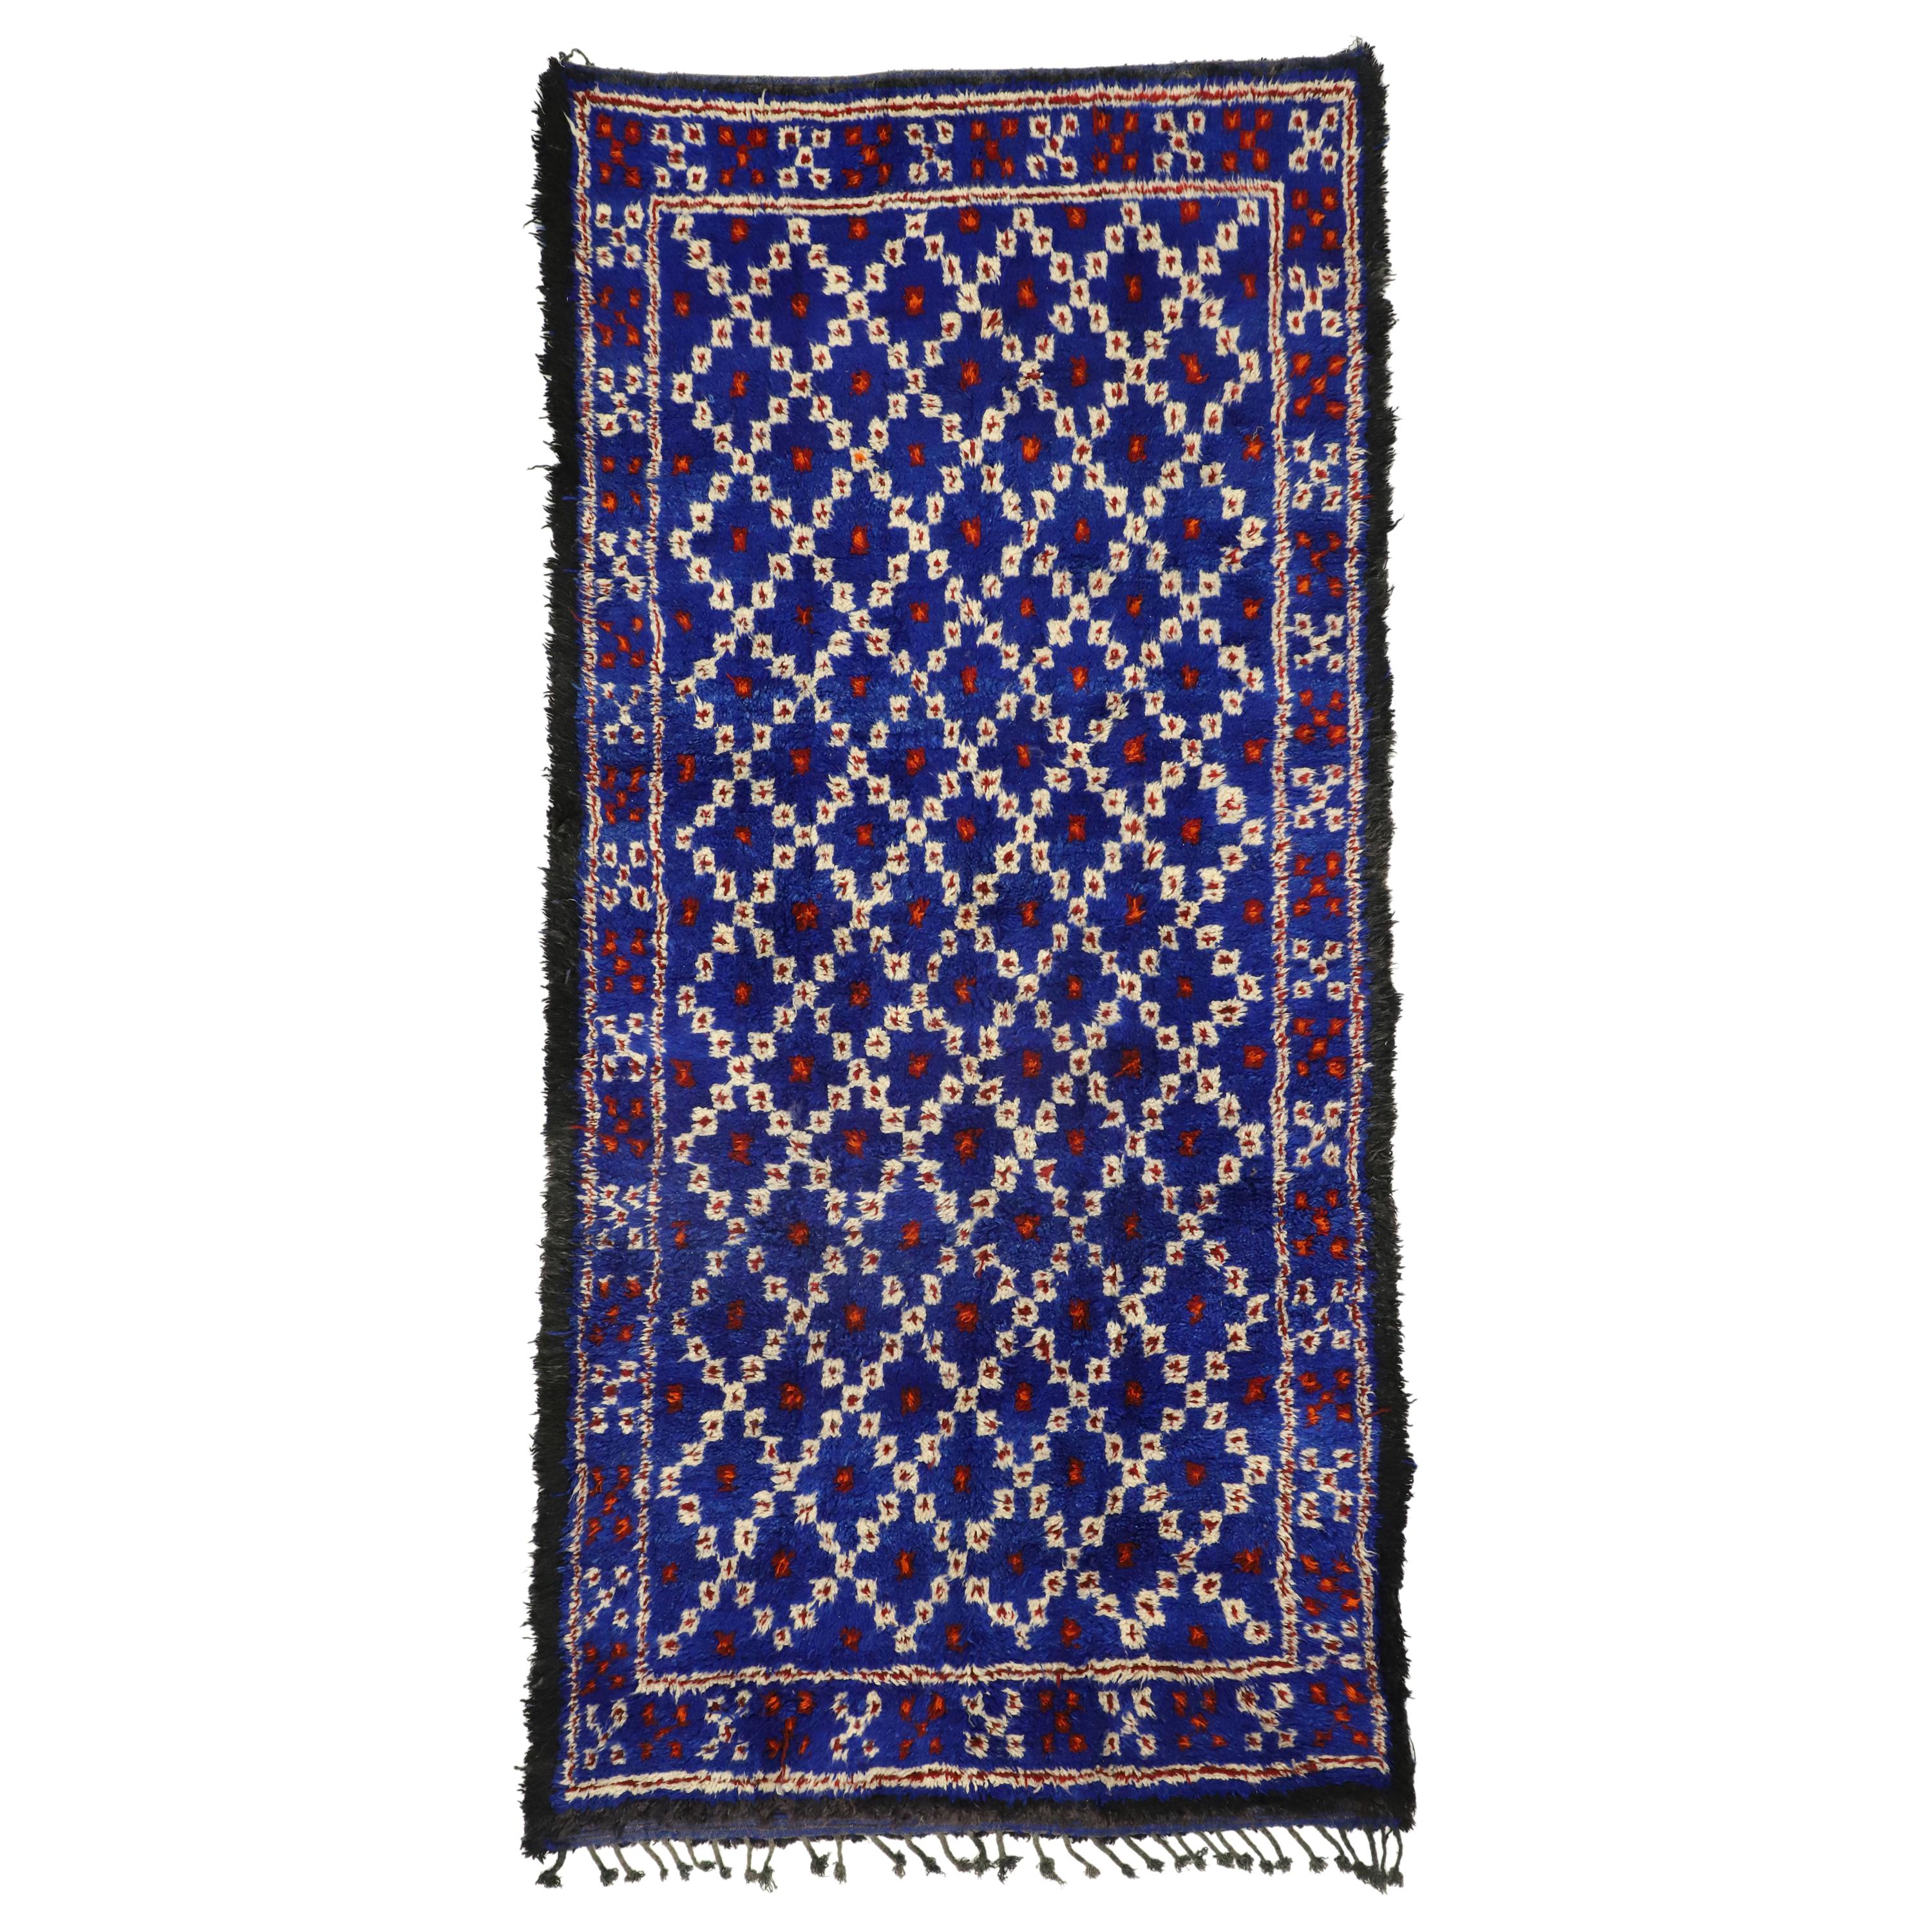 Vintage Indigo Beni M'Guild Rug, Berber Moroccan Carpet